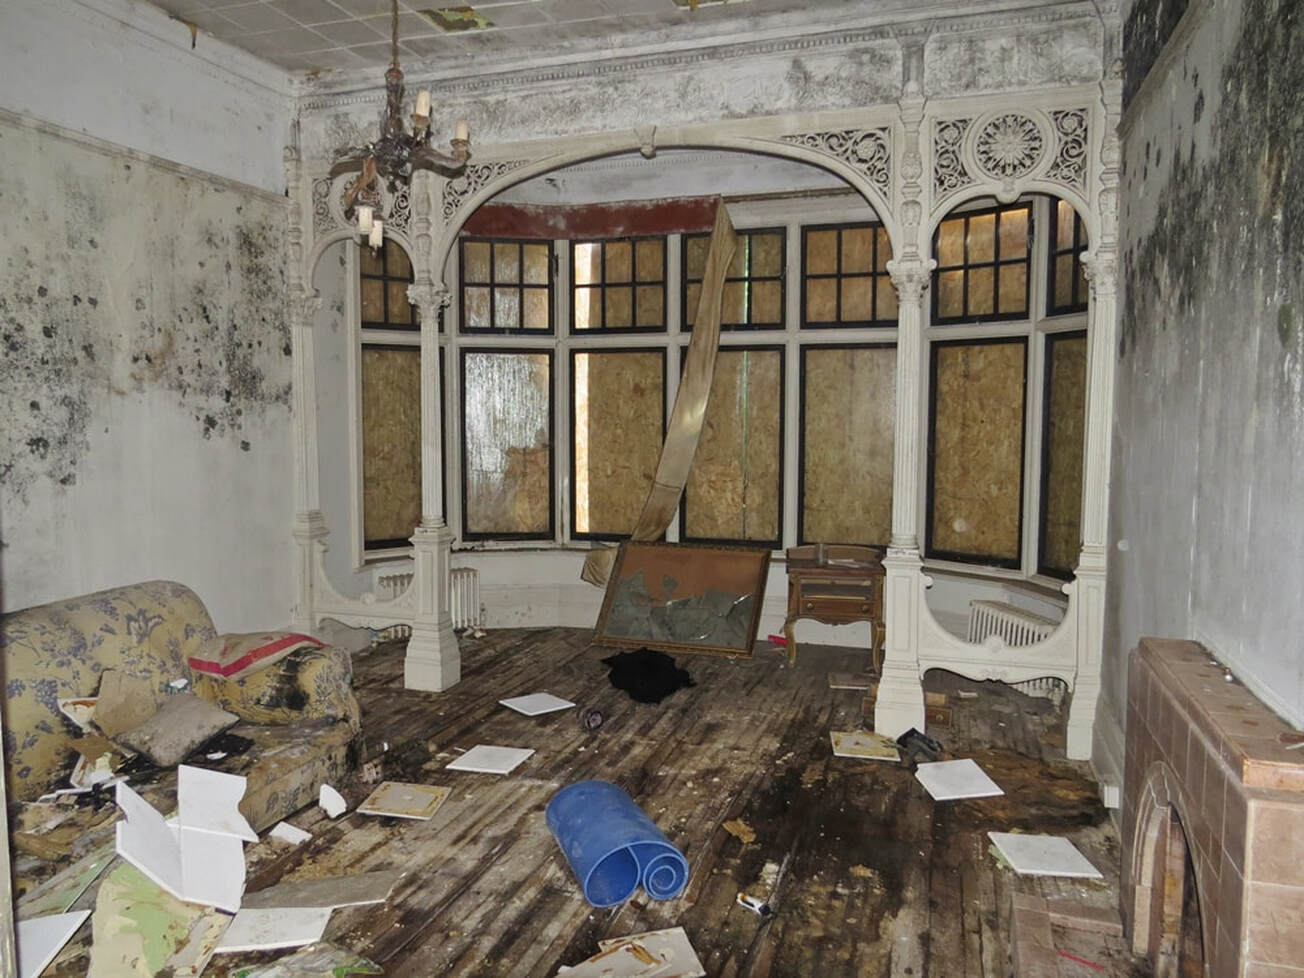 Grand interior of North Dene in Beckenham, empty for many years.